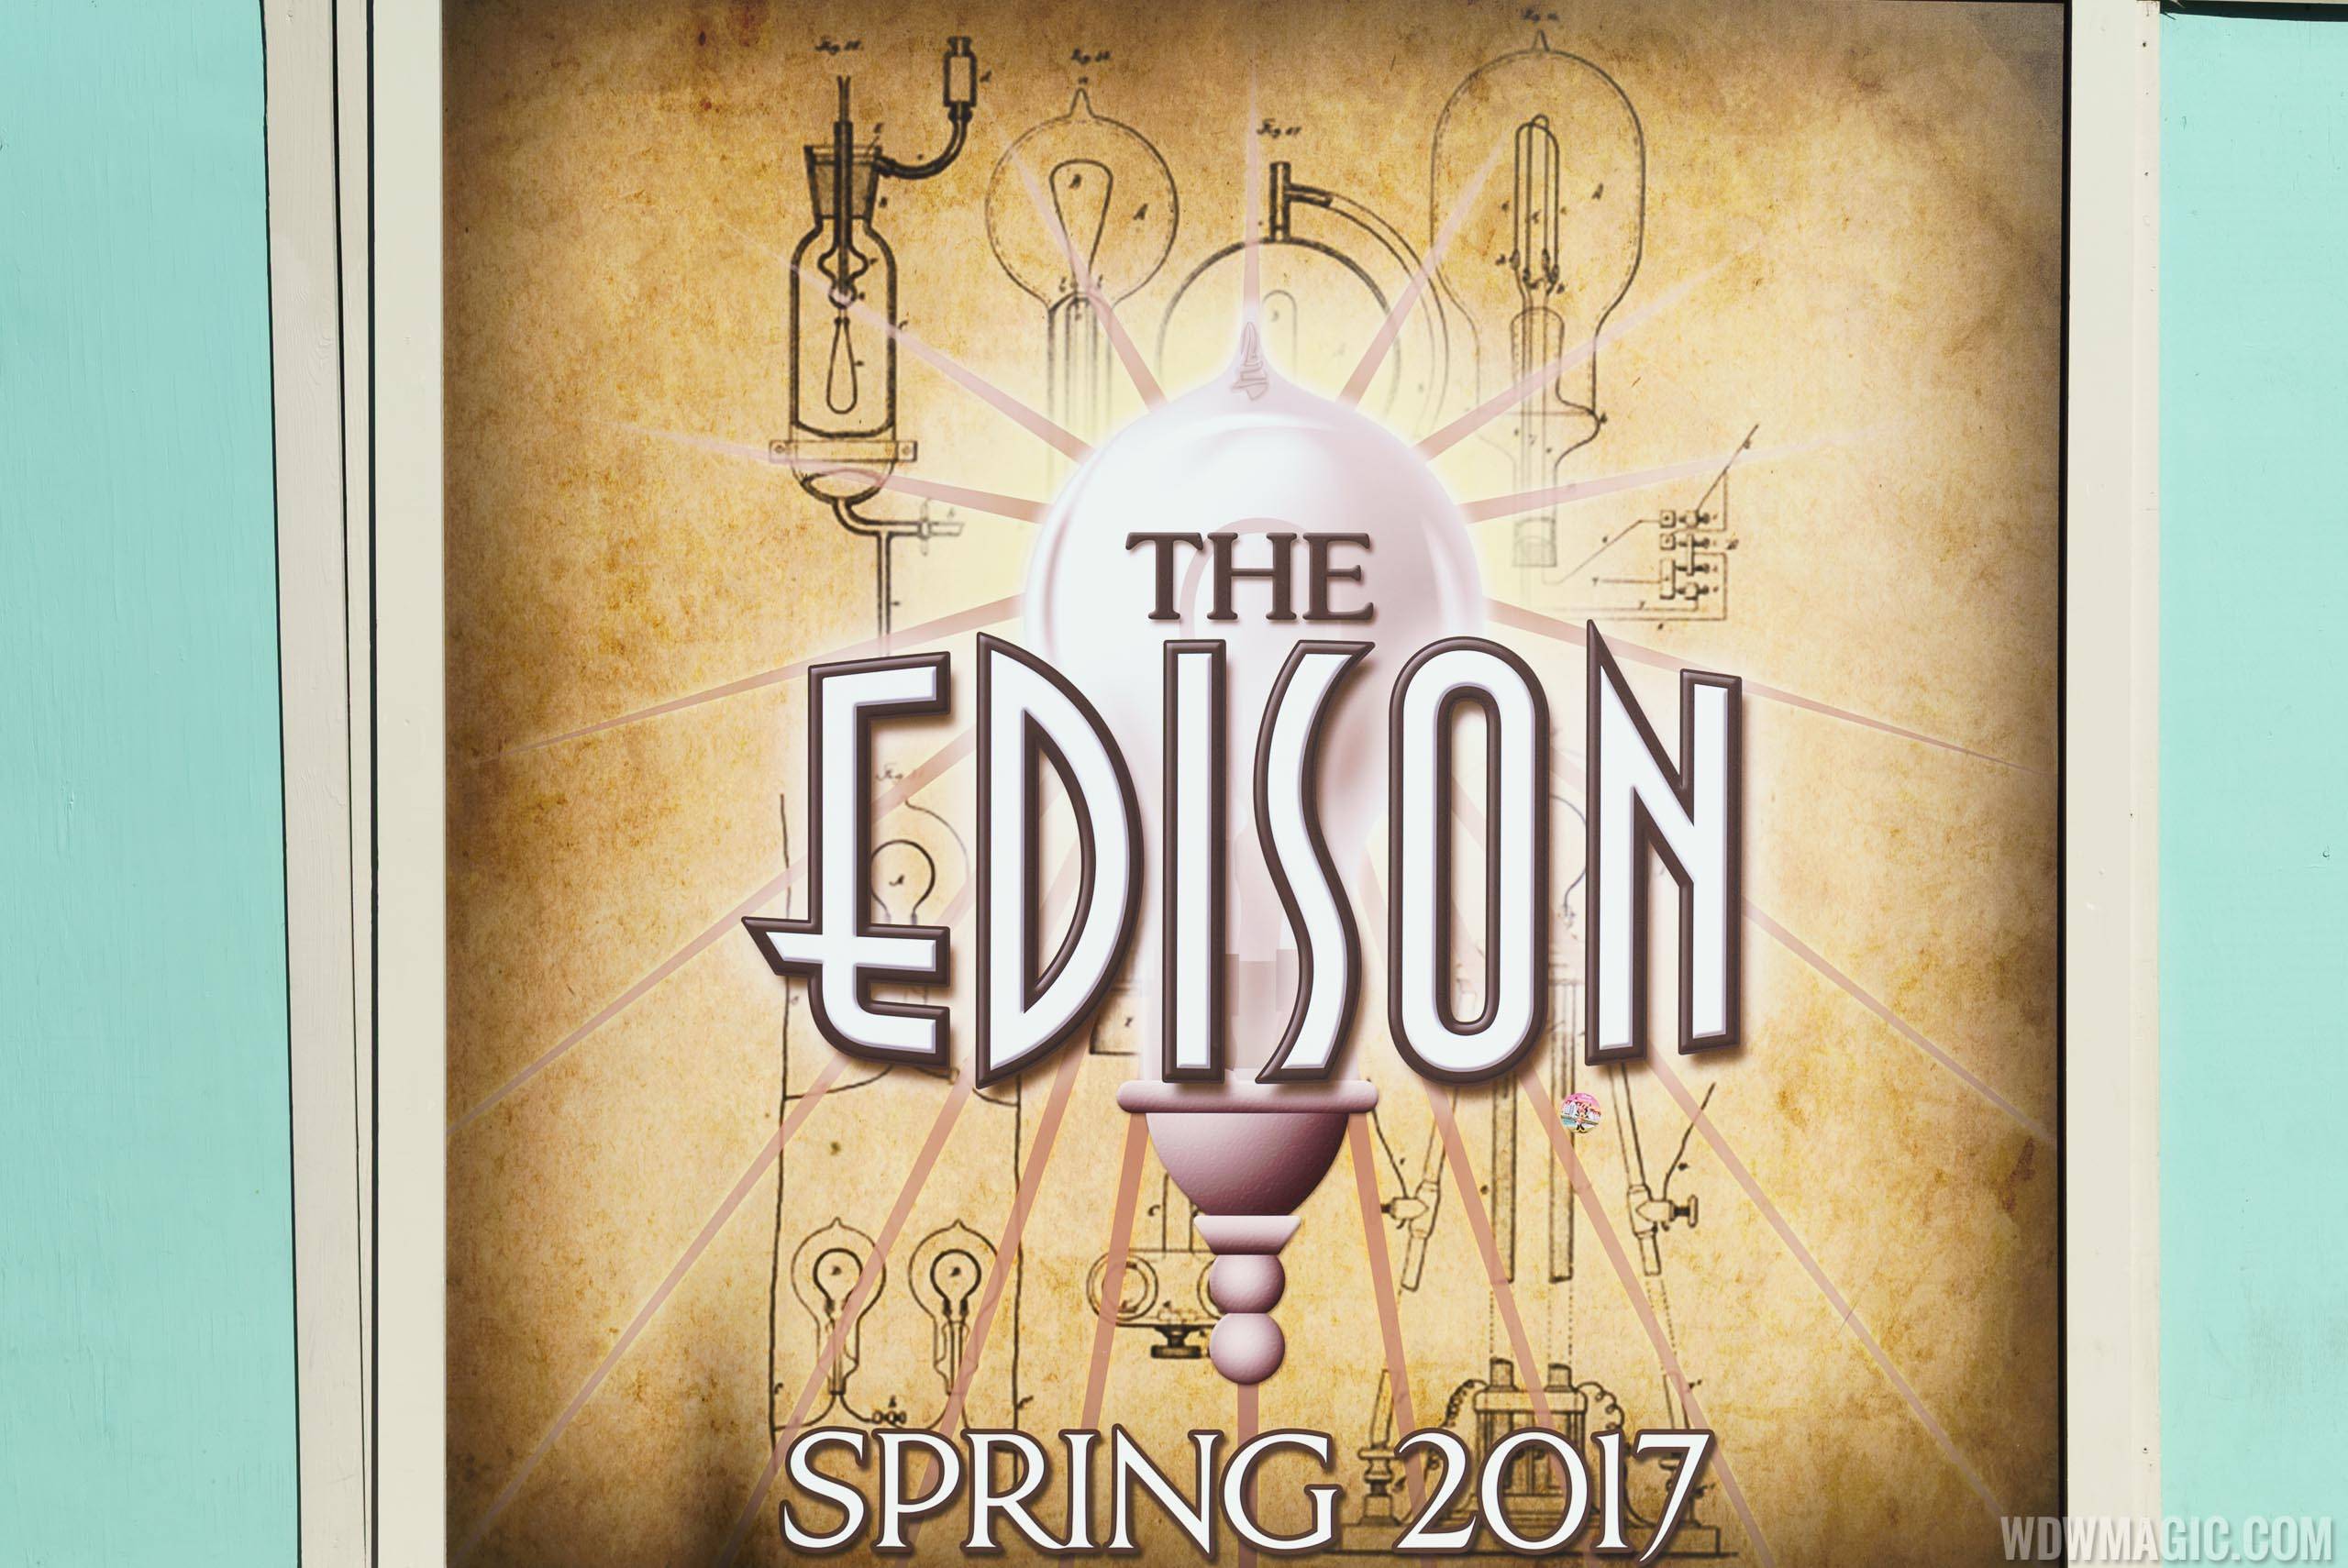 The Edison construction